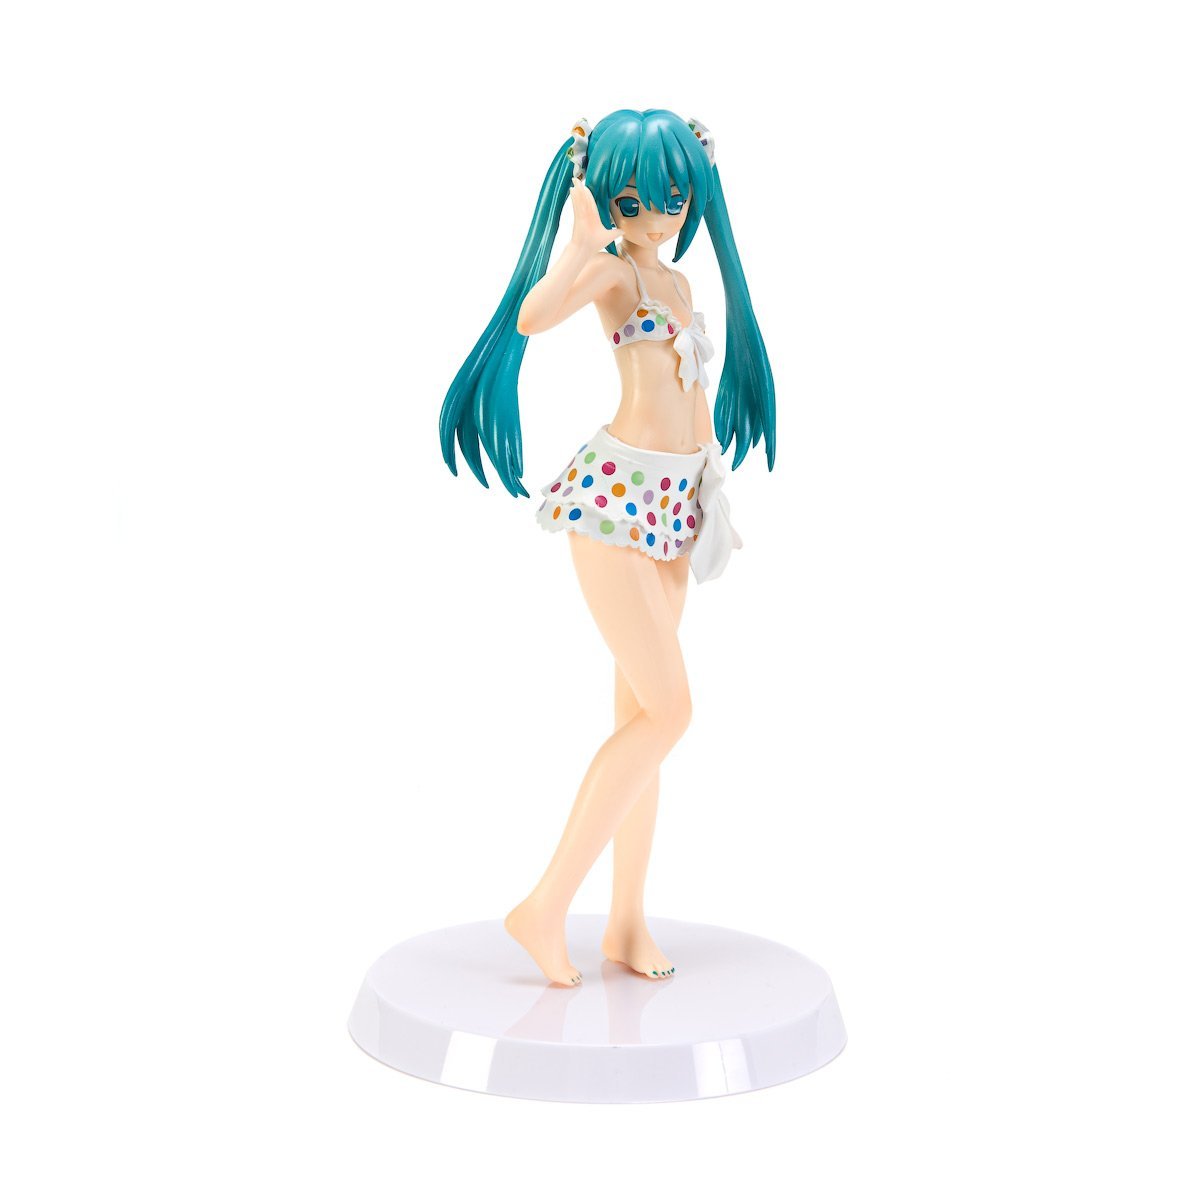 Hatsune Miku, Polka Dot Swimsuit Bikini Ver., Vocaloid, Project Diva - F, Sega